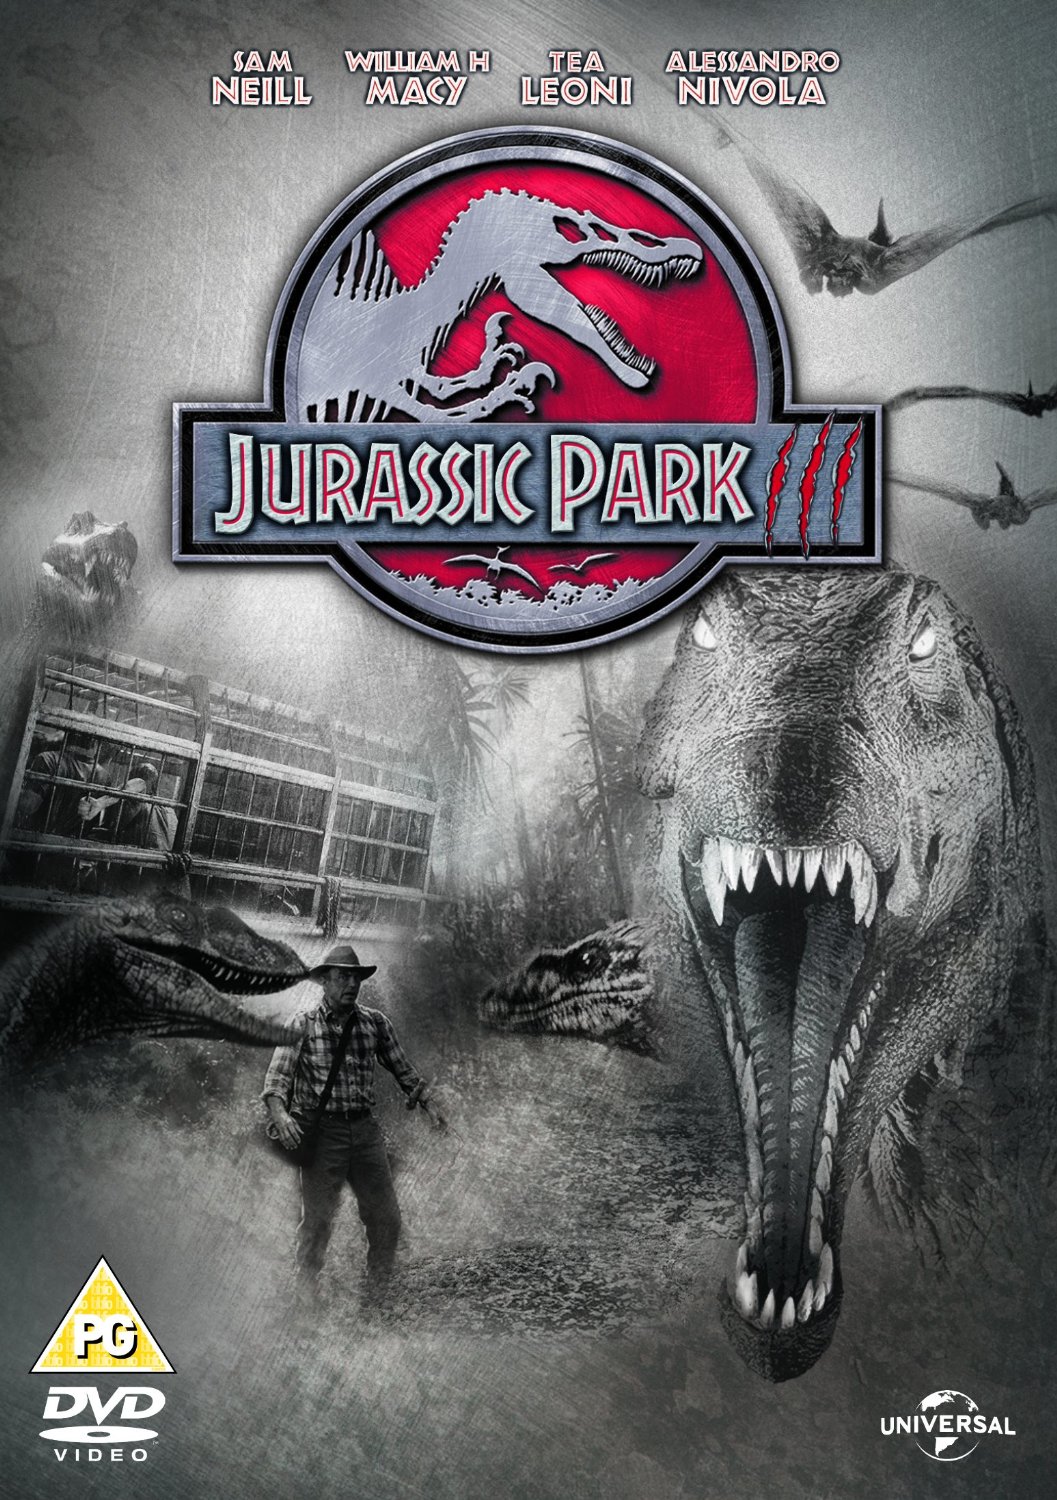 Jurassic Park Iii (DVD)